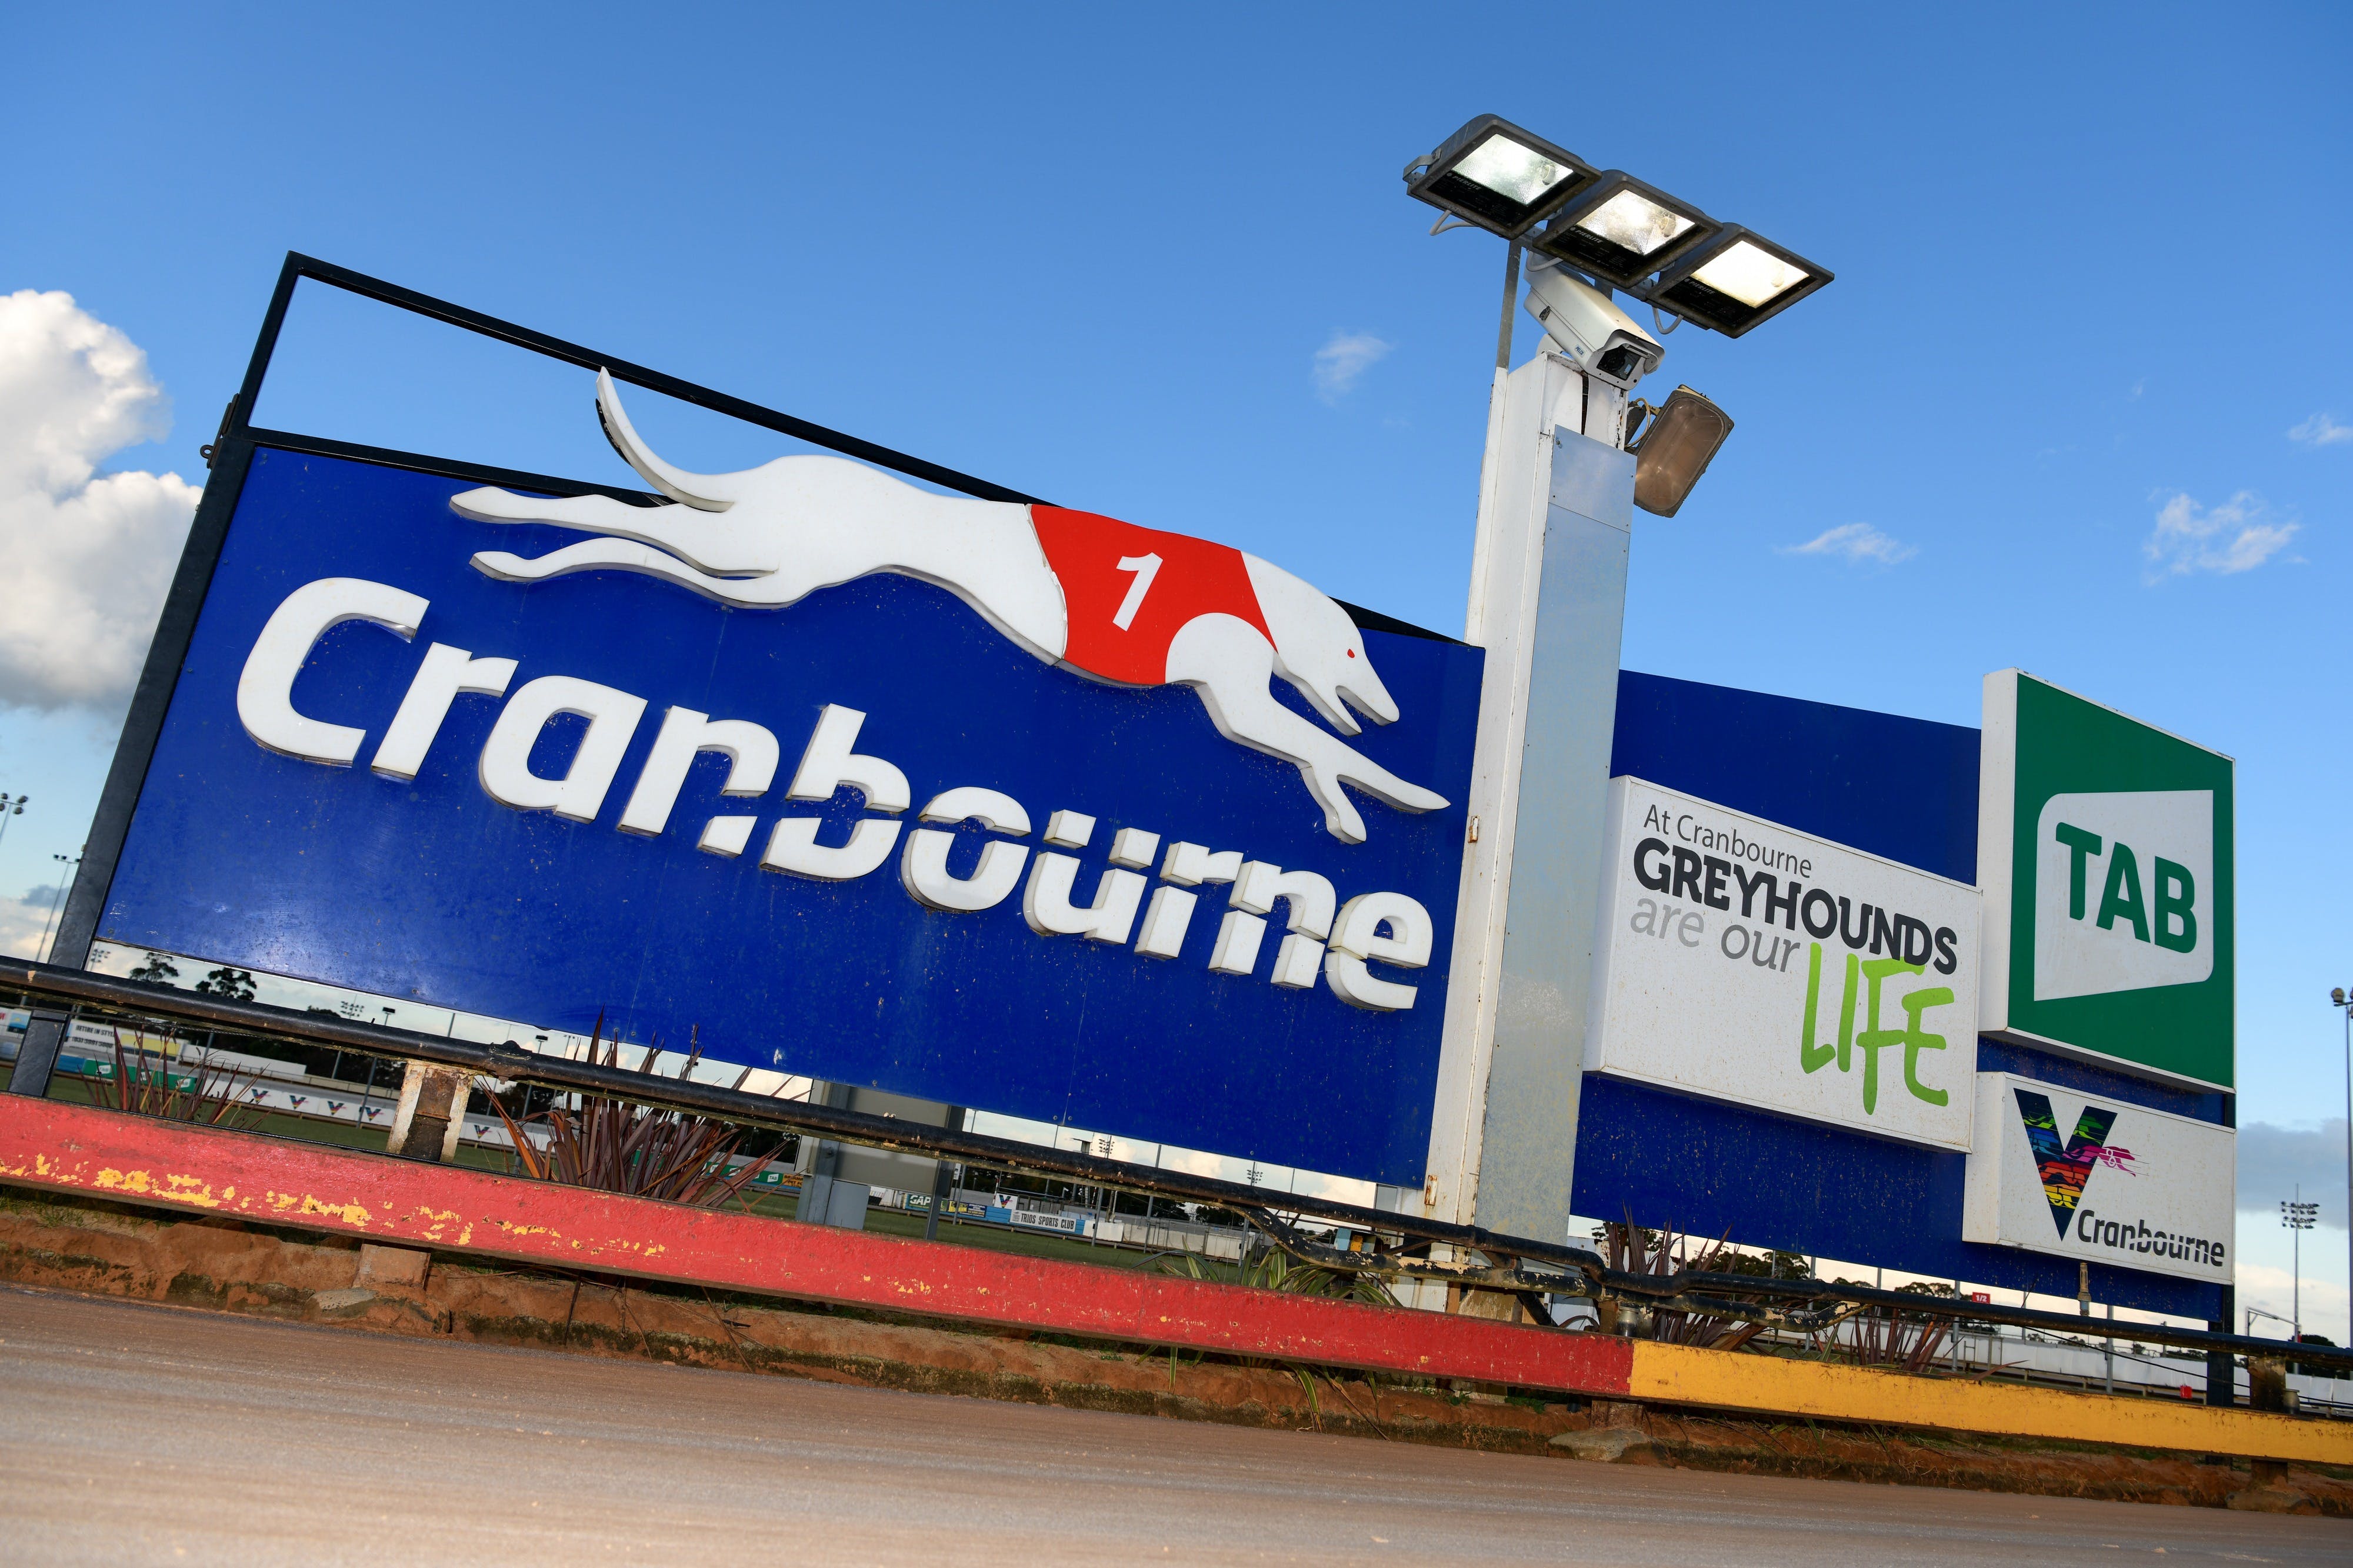 Cranbourne Greyhound Racing Club - Tourism Cairns